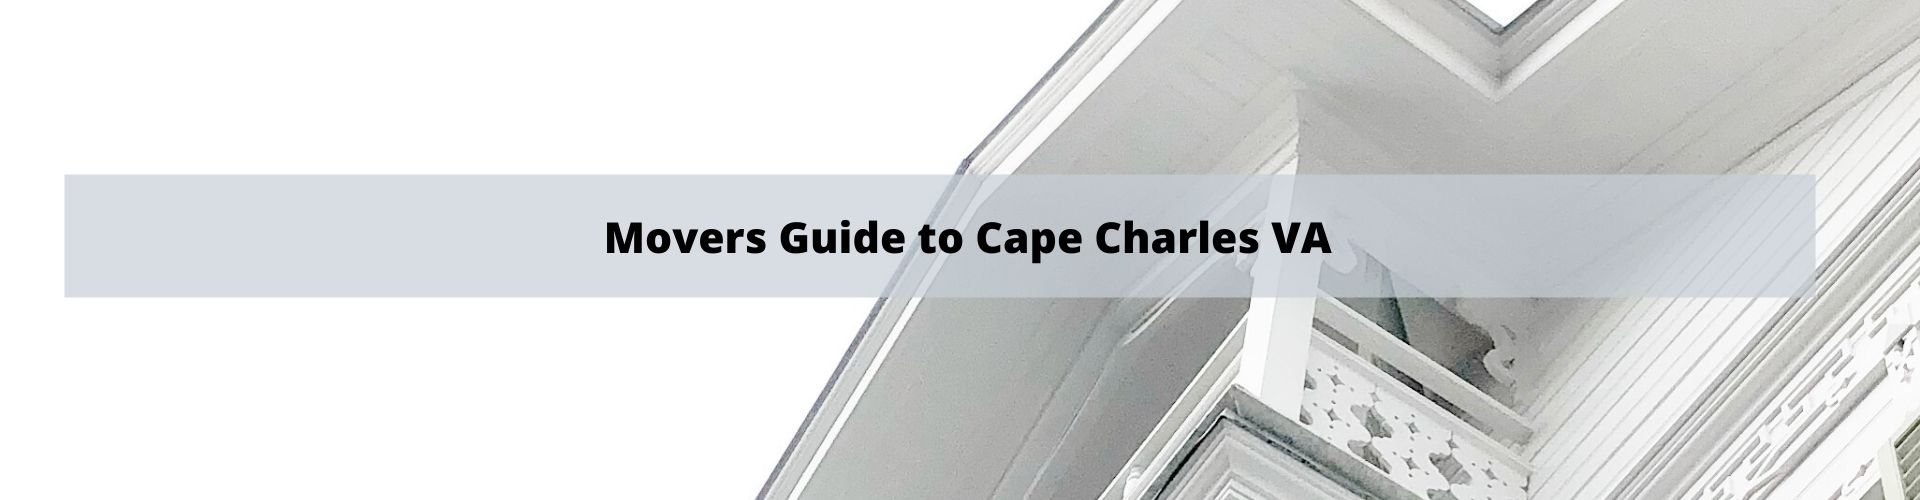 Cape Charles VA Mover's Guide